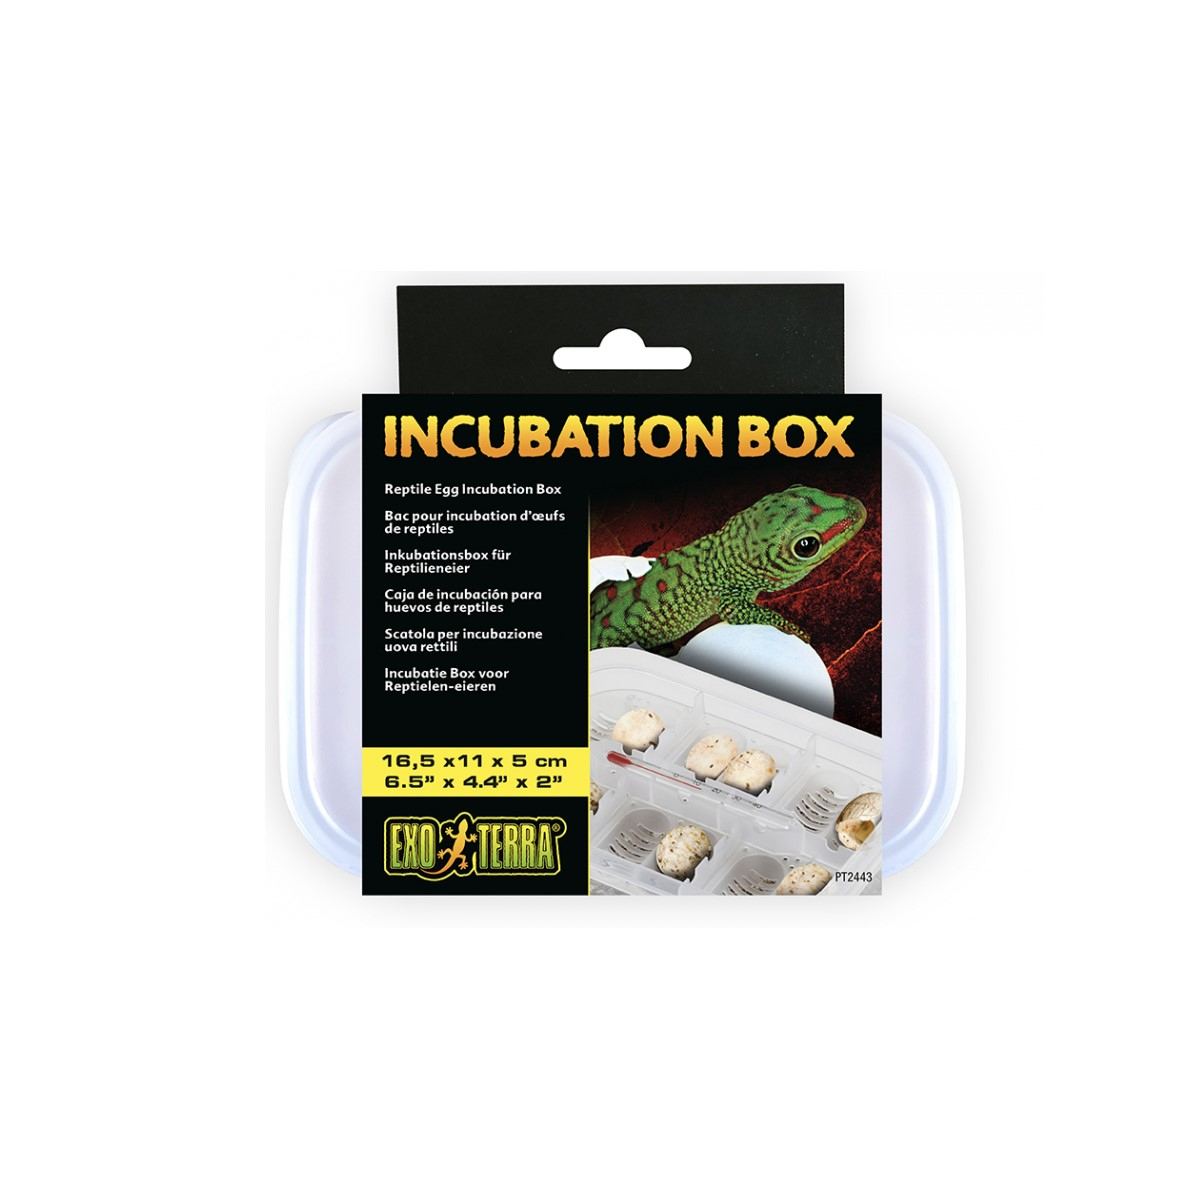 Exo Terra incubation box